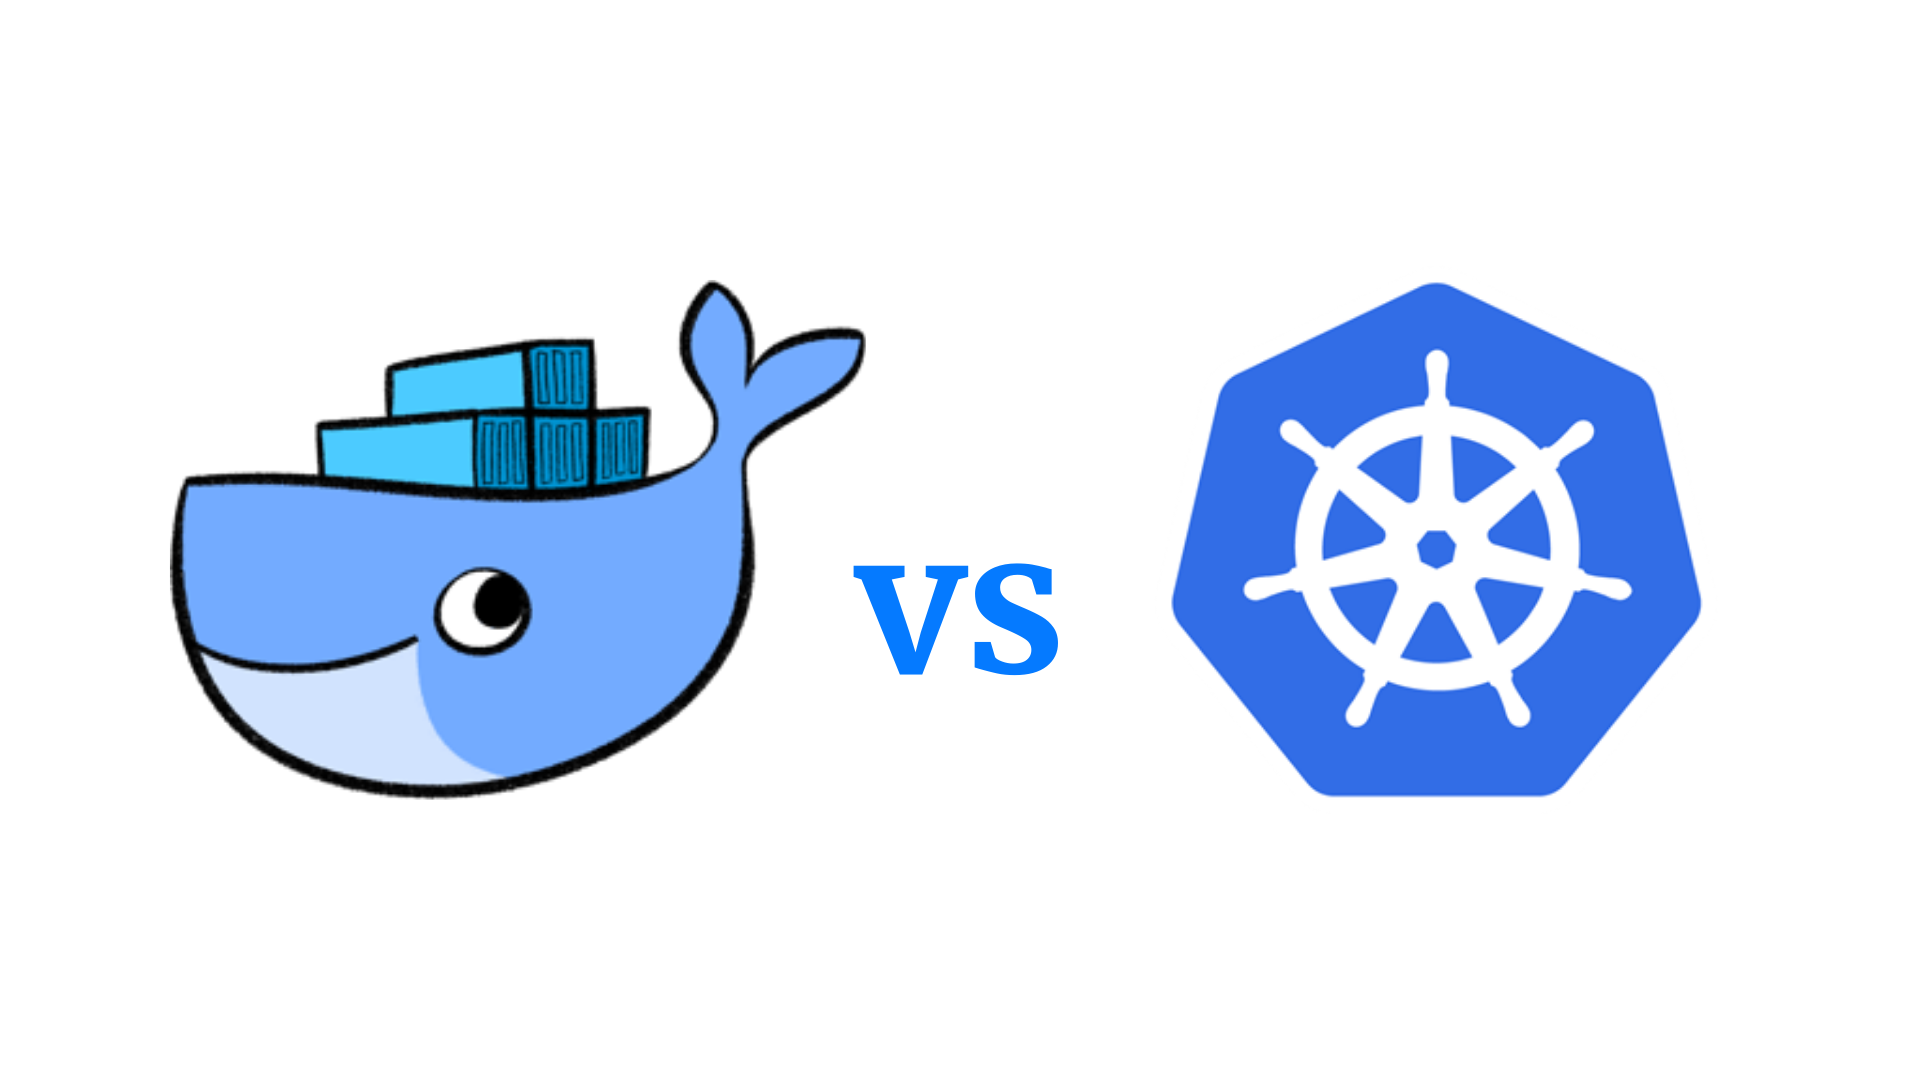 Docker vs Kubernetes? It should be Docker + Kubernetes